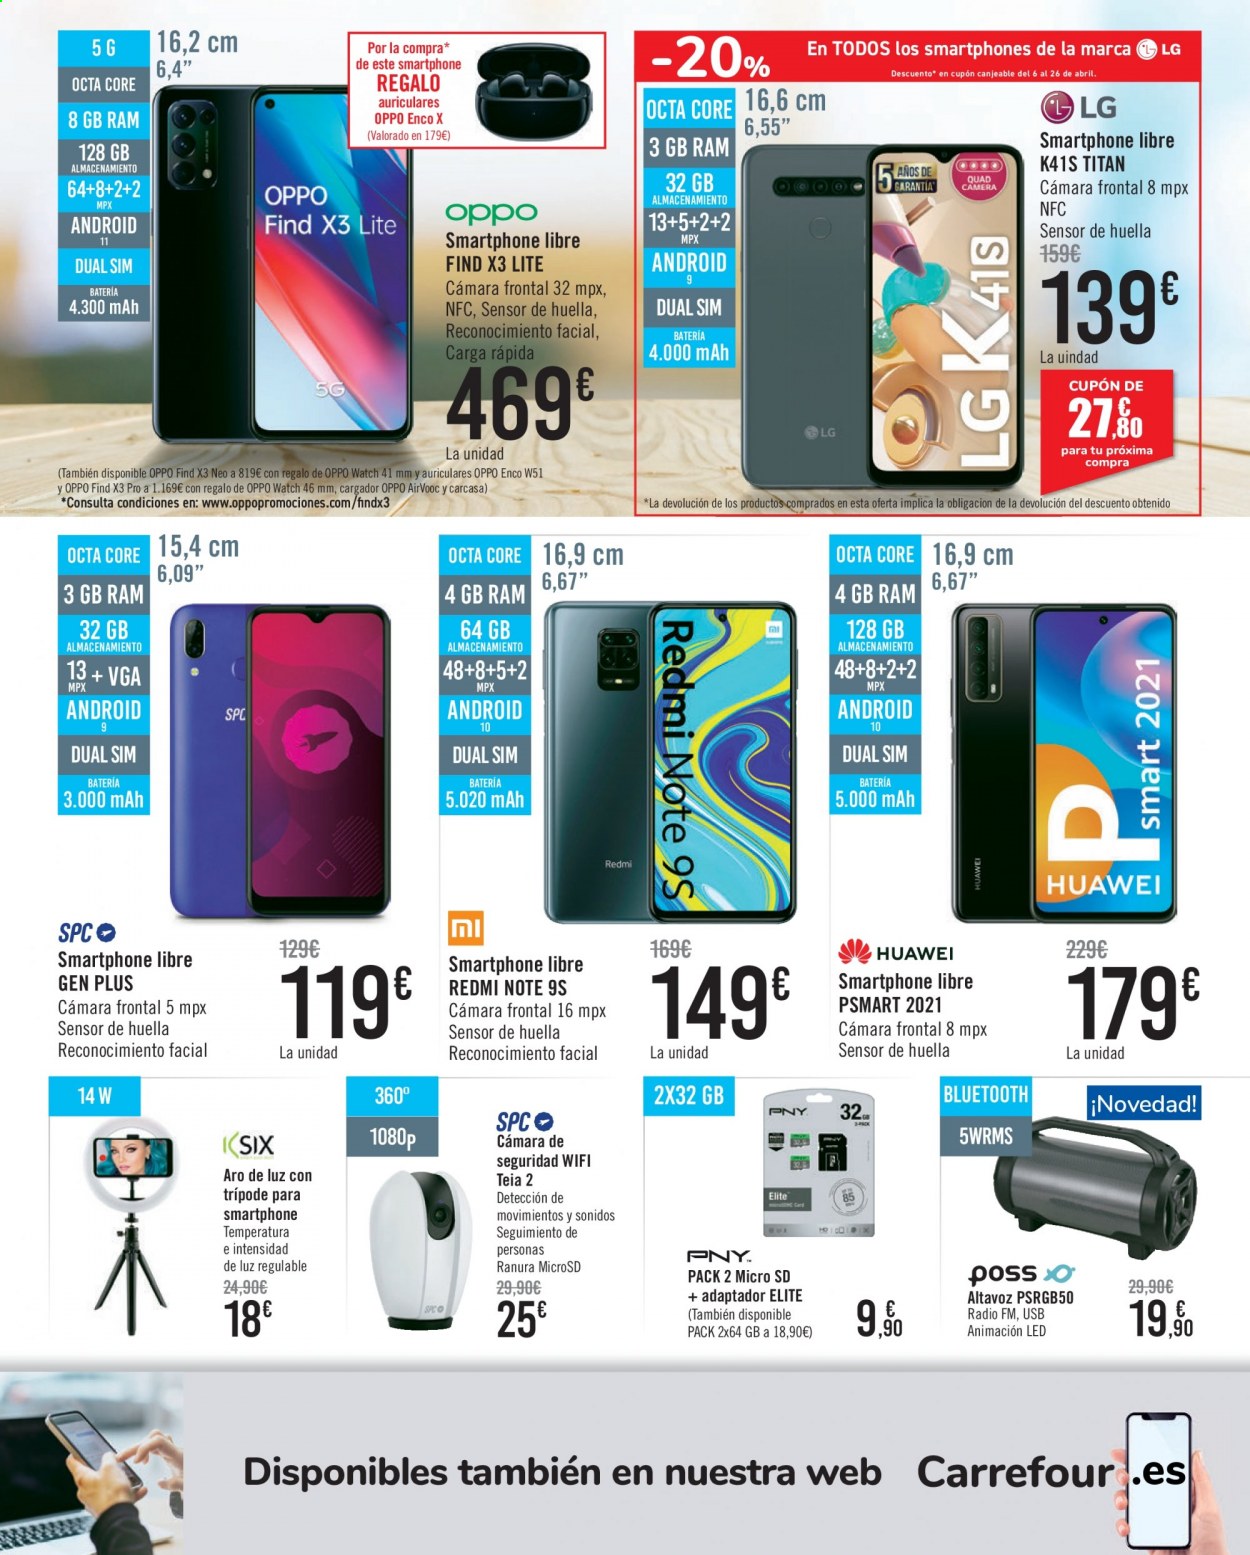 thumbnail - Folleto actual Carrefour - 24/03/21 - 05/04/21 - Ventas - LG, Huawei, smartphone, celular, Xiaomi Redmi Note, cargador, altavoz, auriculares. Página 49.